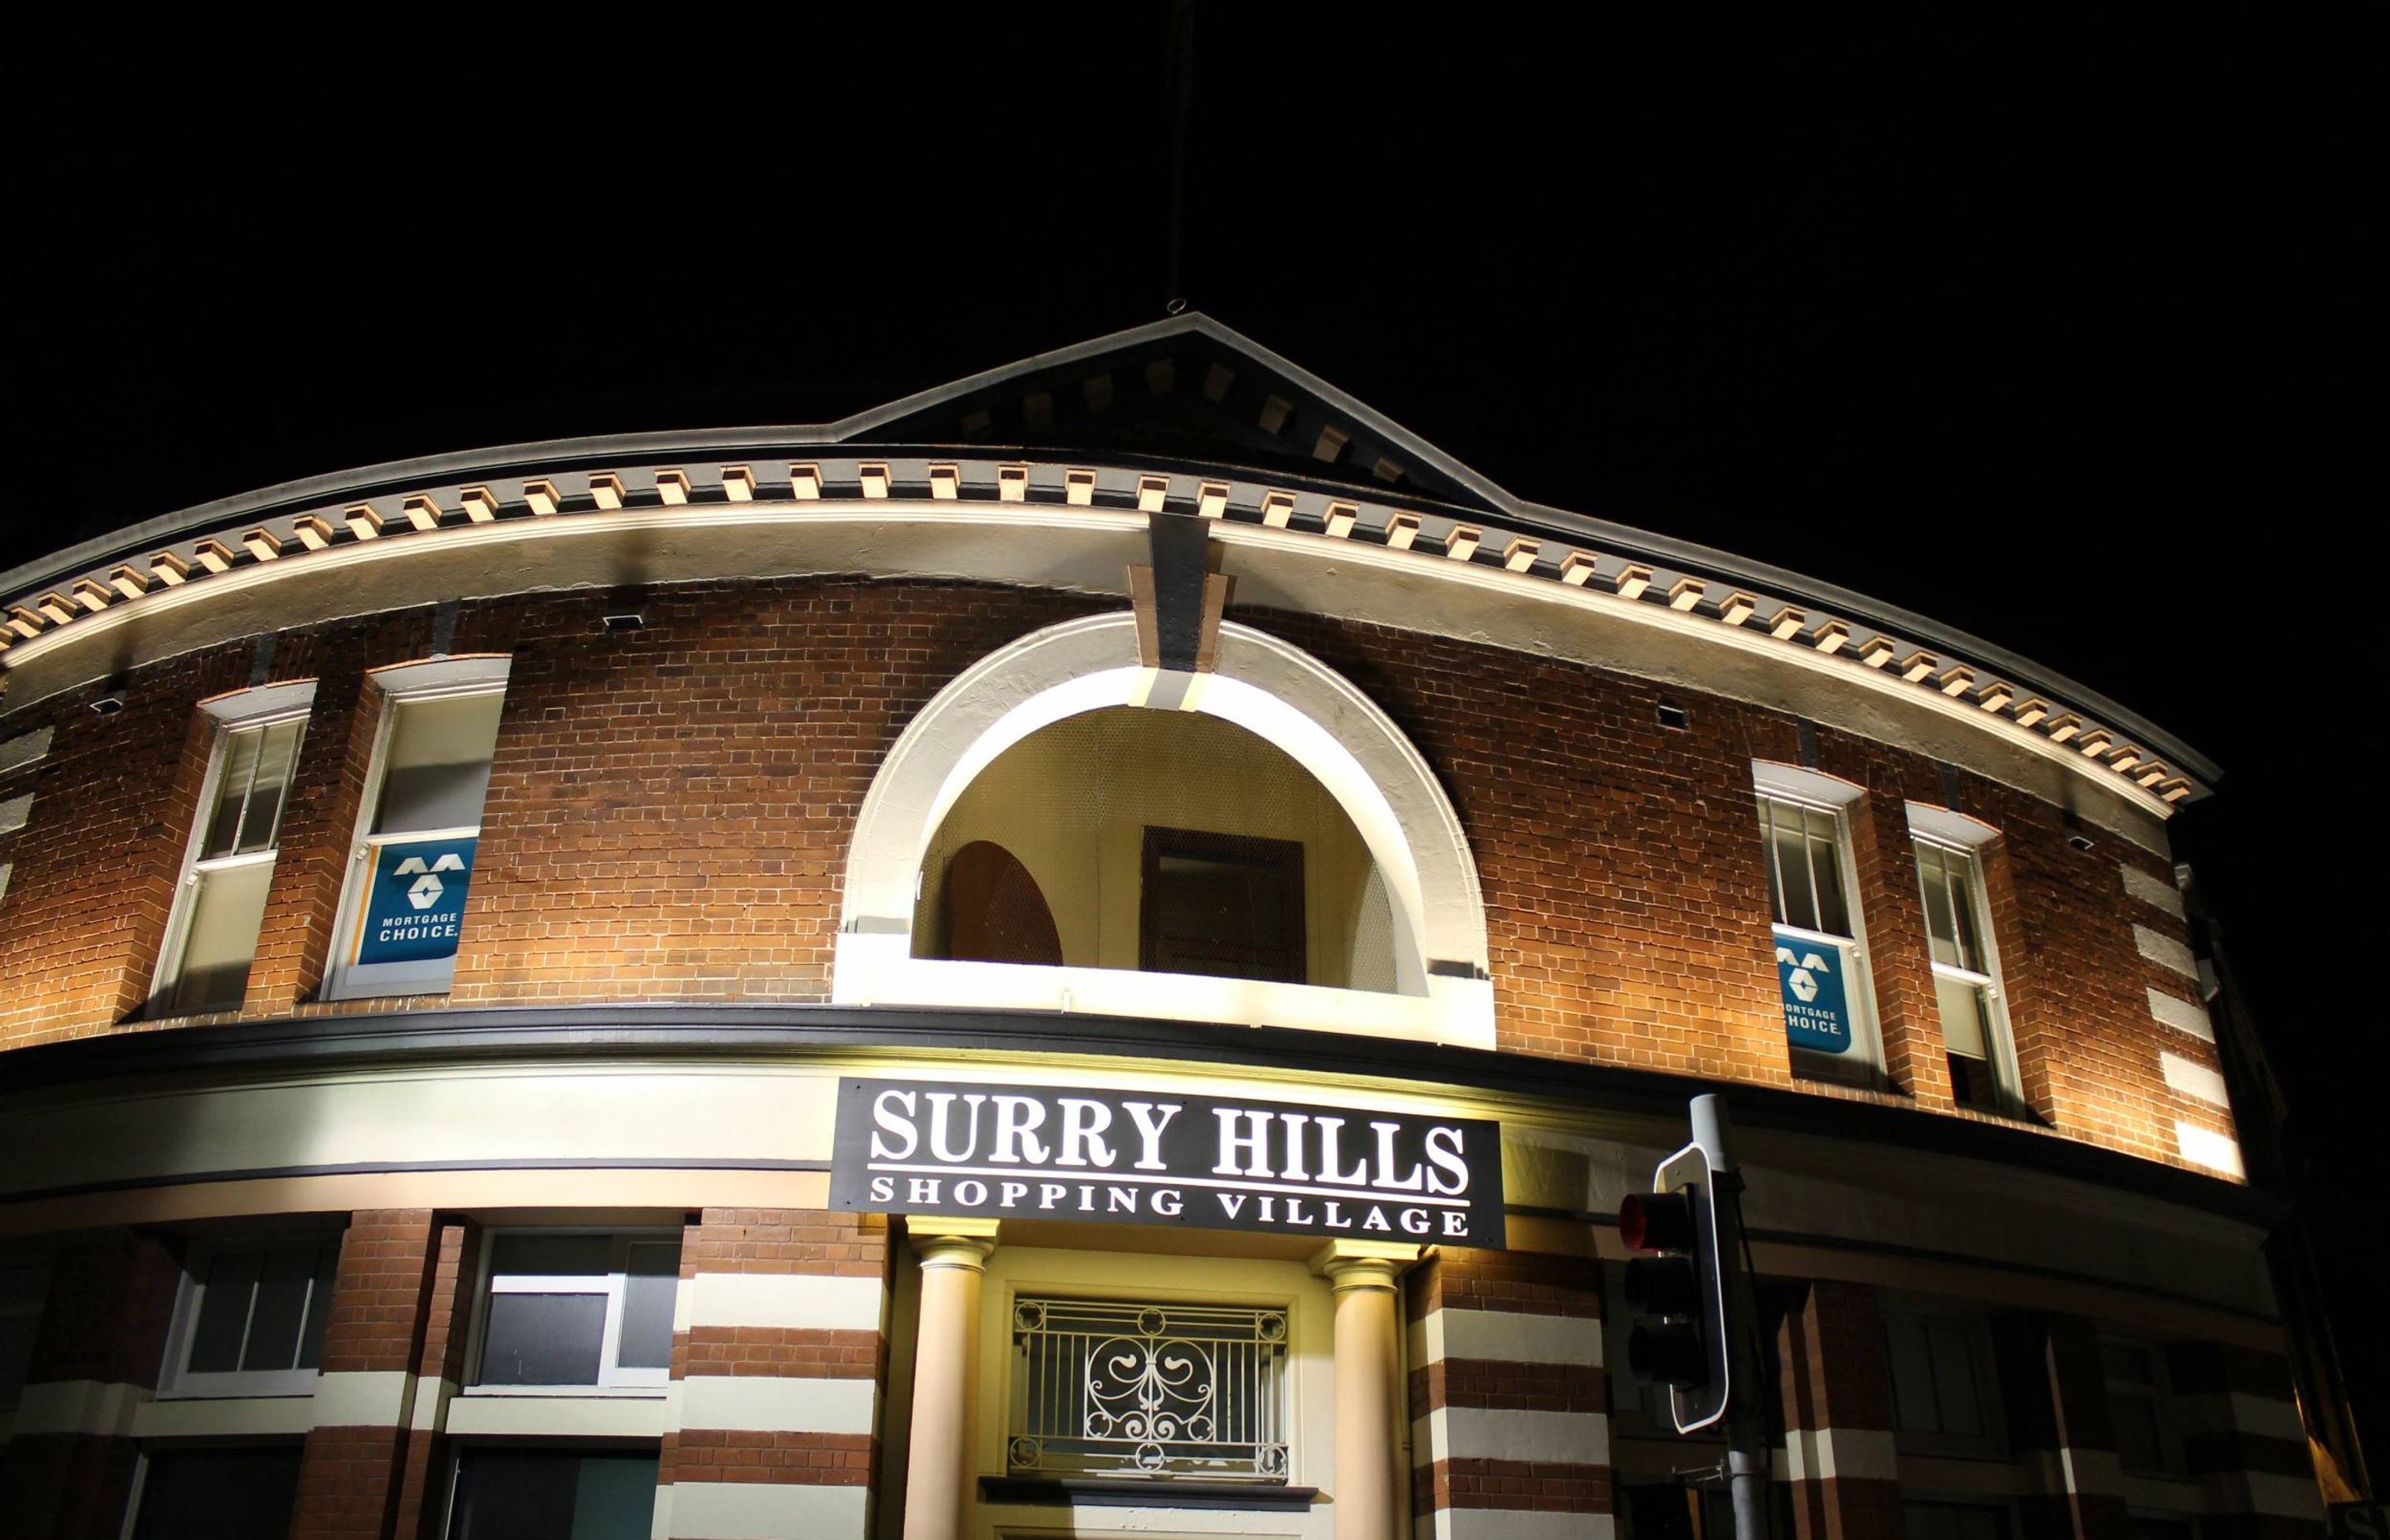 ##Surry Hills Shopping Village, NSW